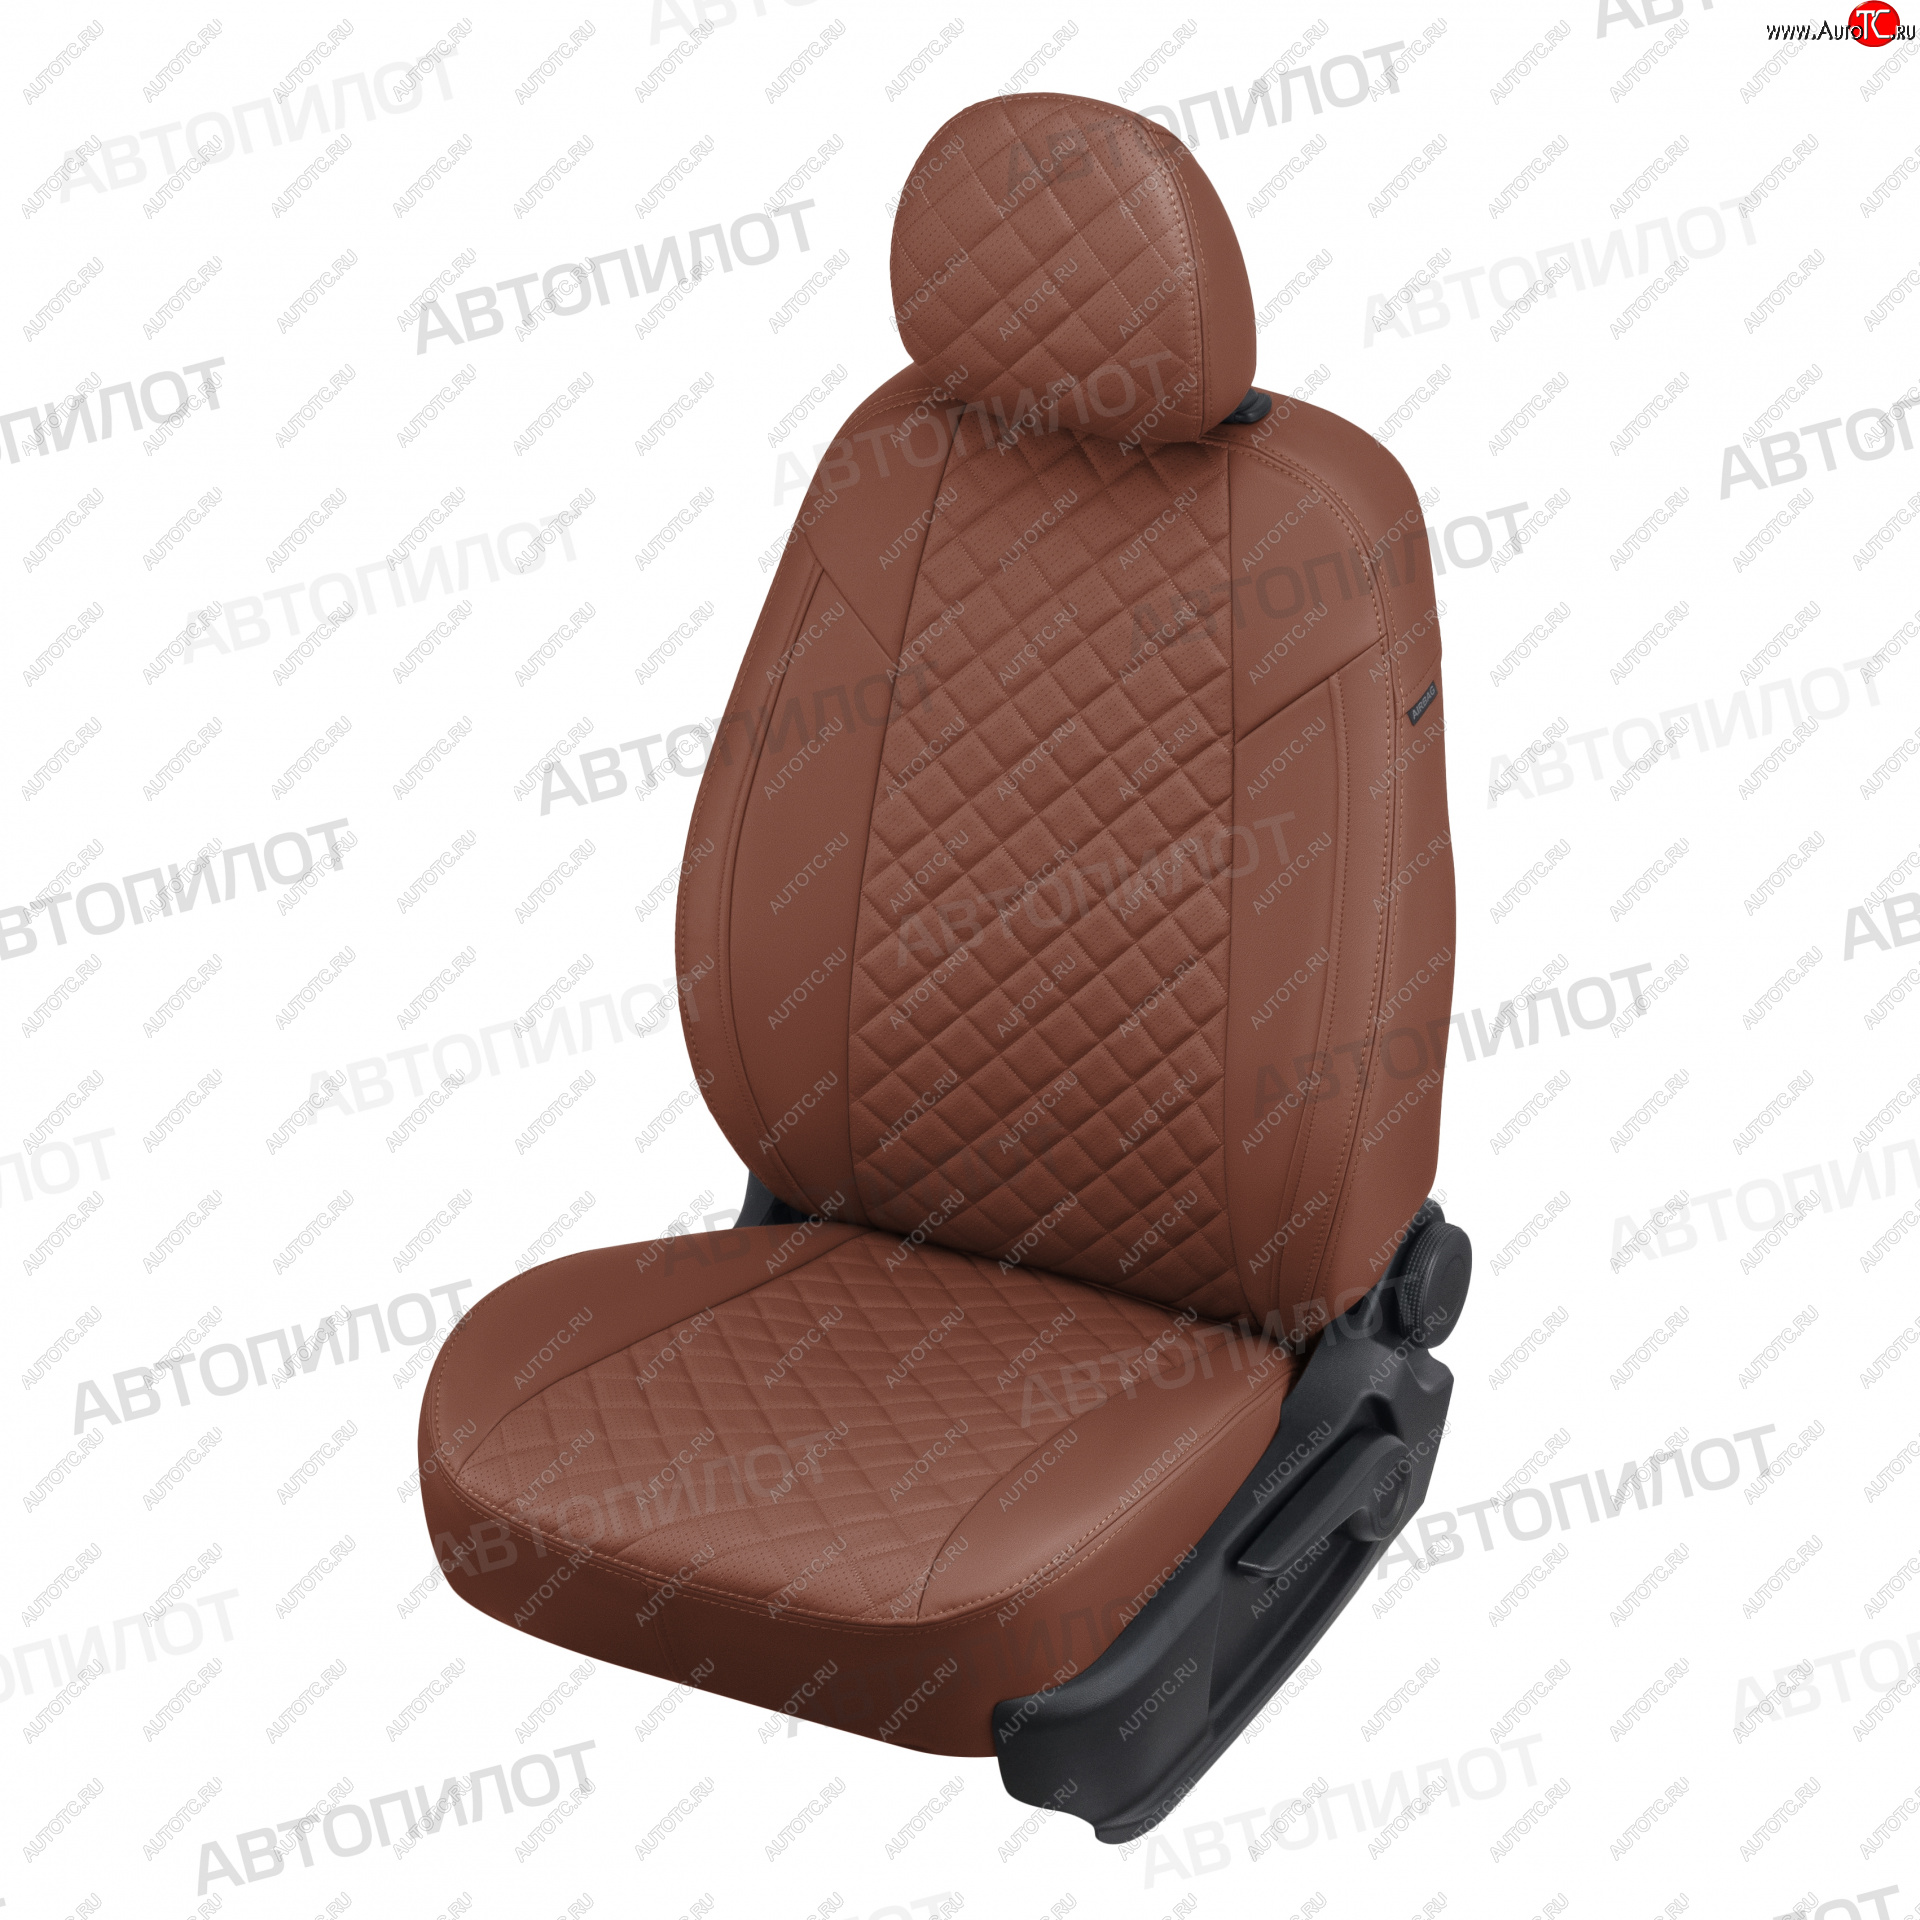 13 999 р. Чехлы сидений (5 мест, экокожа) Автопилот Ромб  Ford Galaxy  WGR (1995-2006) (коричневый)